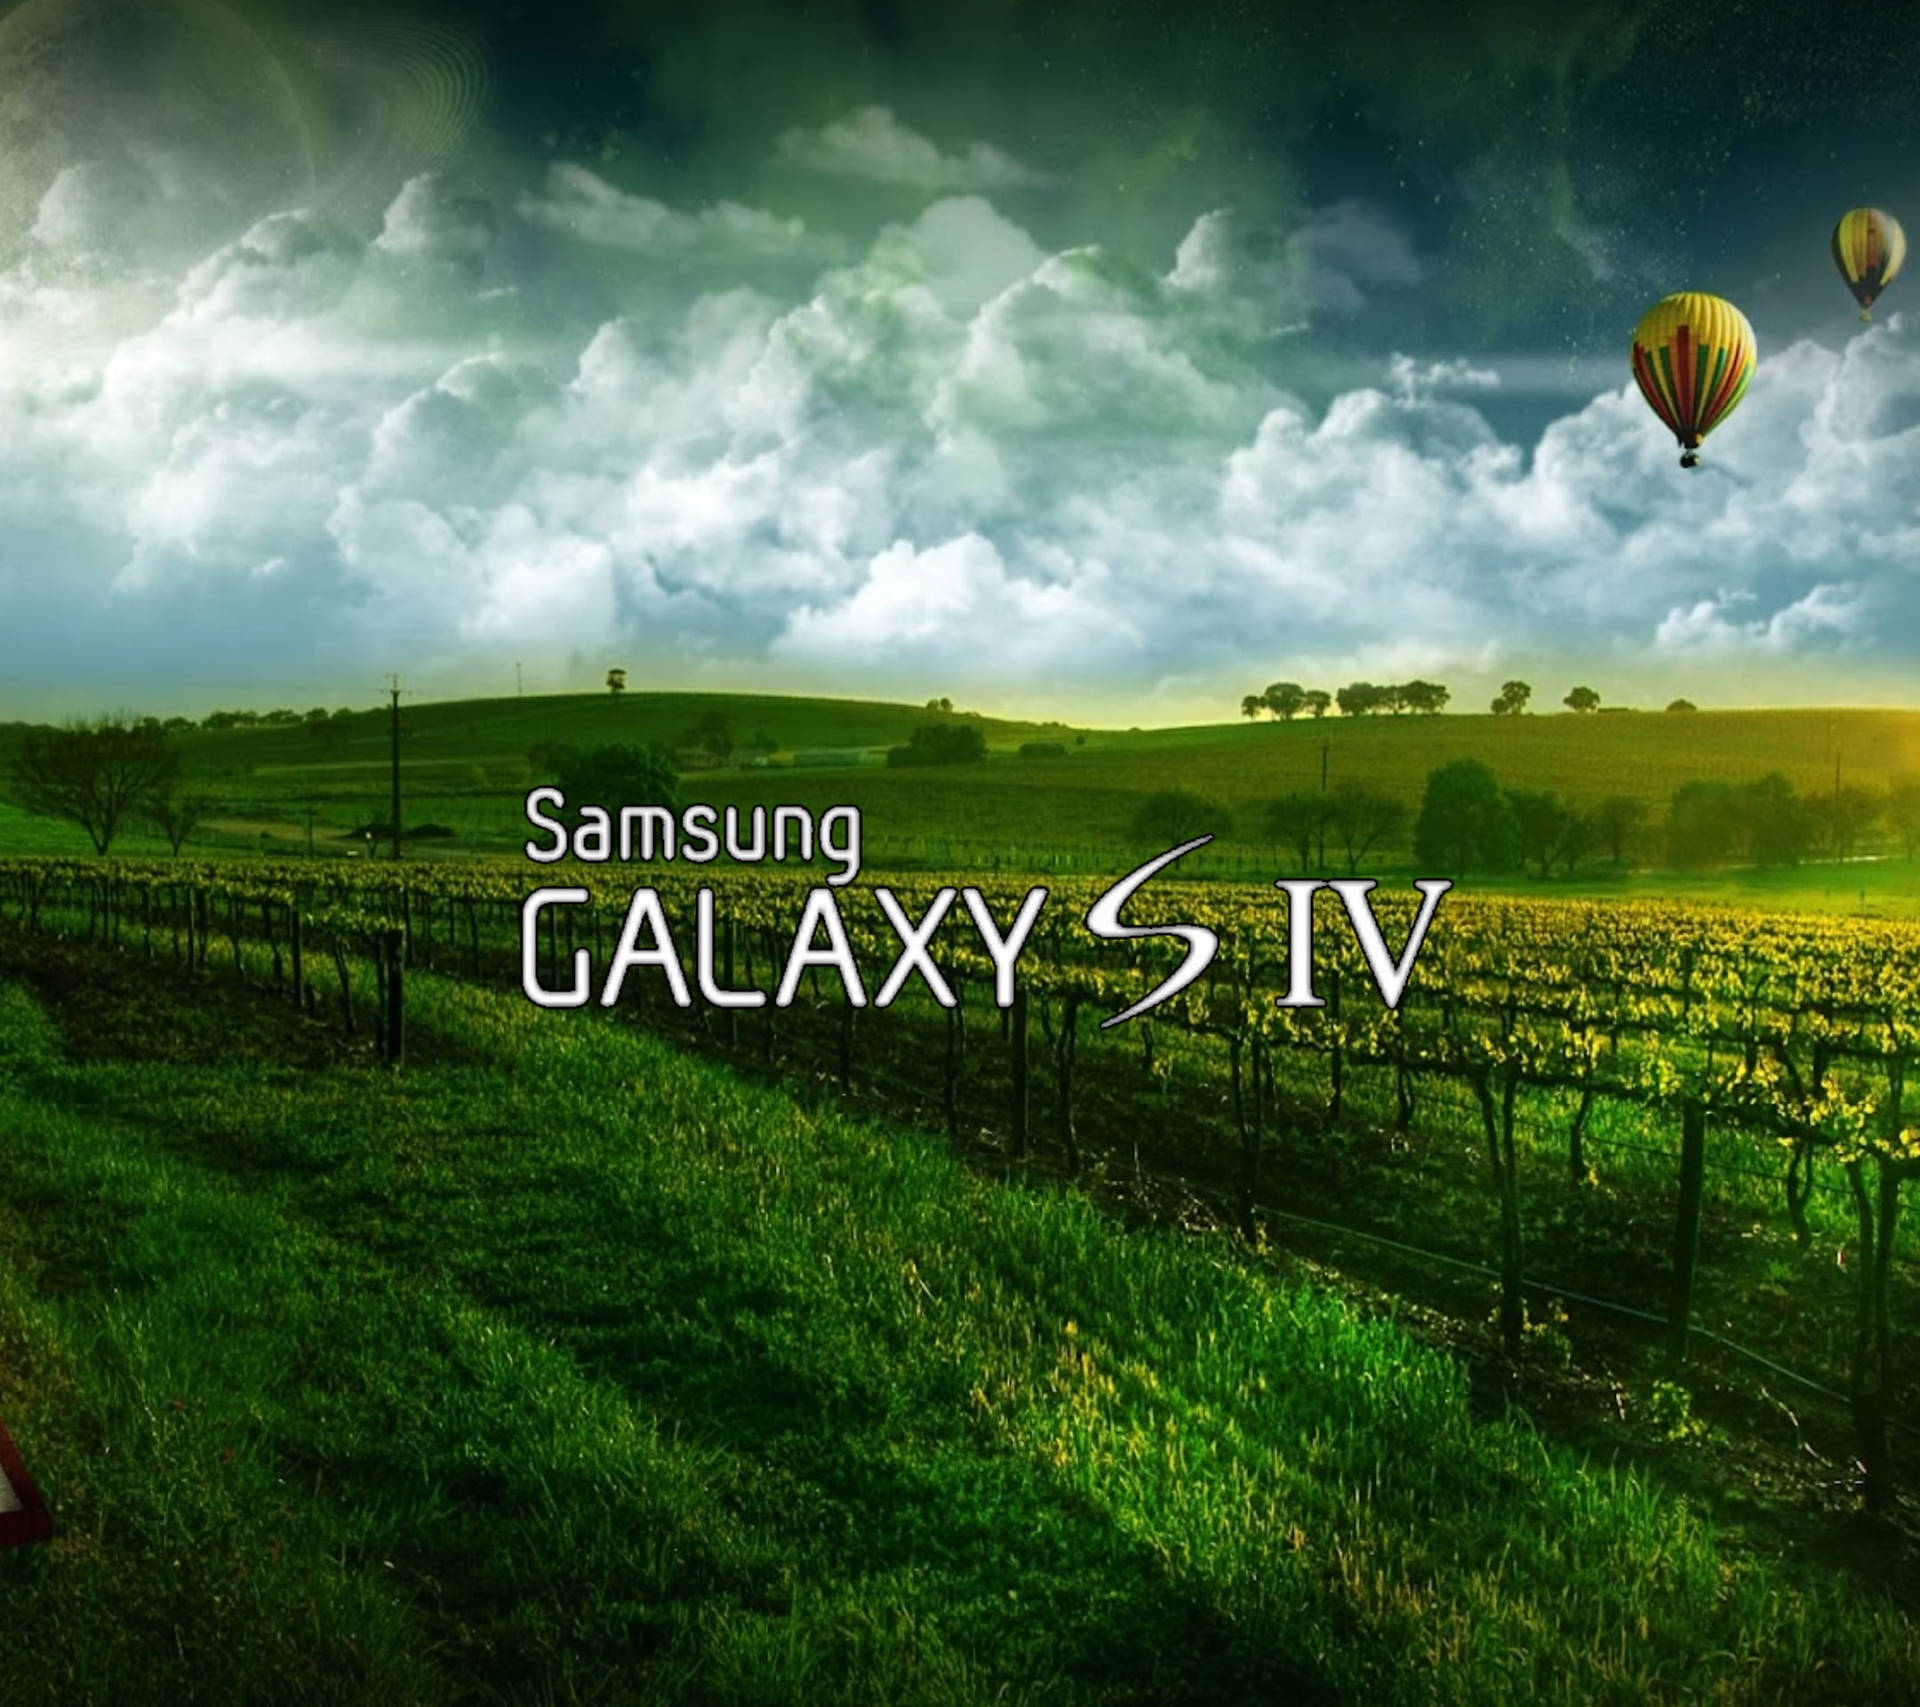 Samsung Galaxy S4 Background Wallpaper